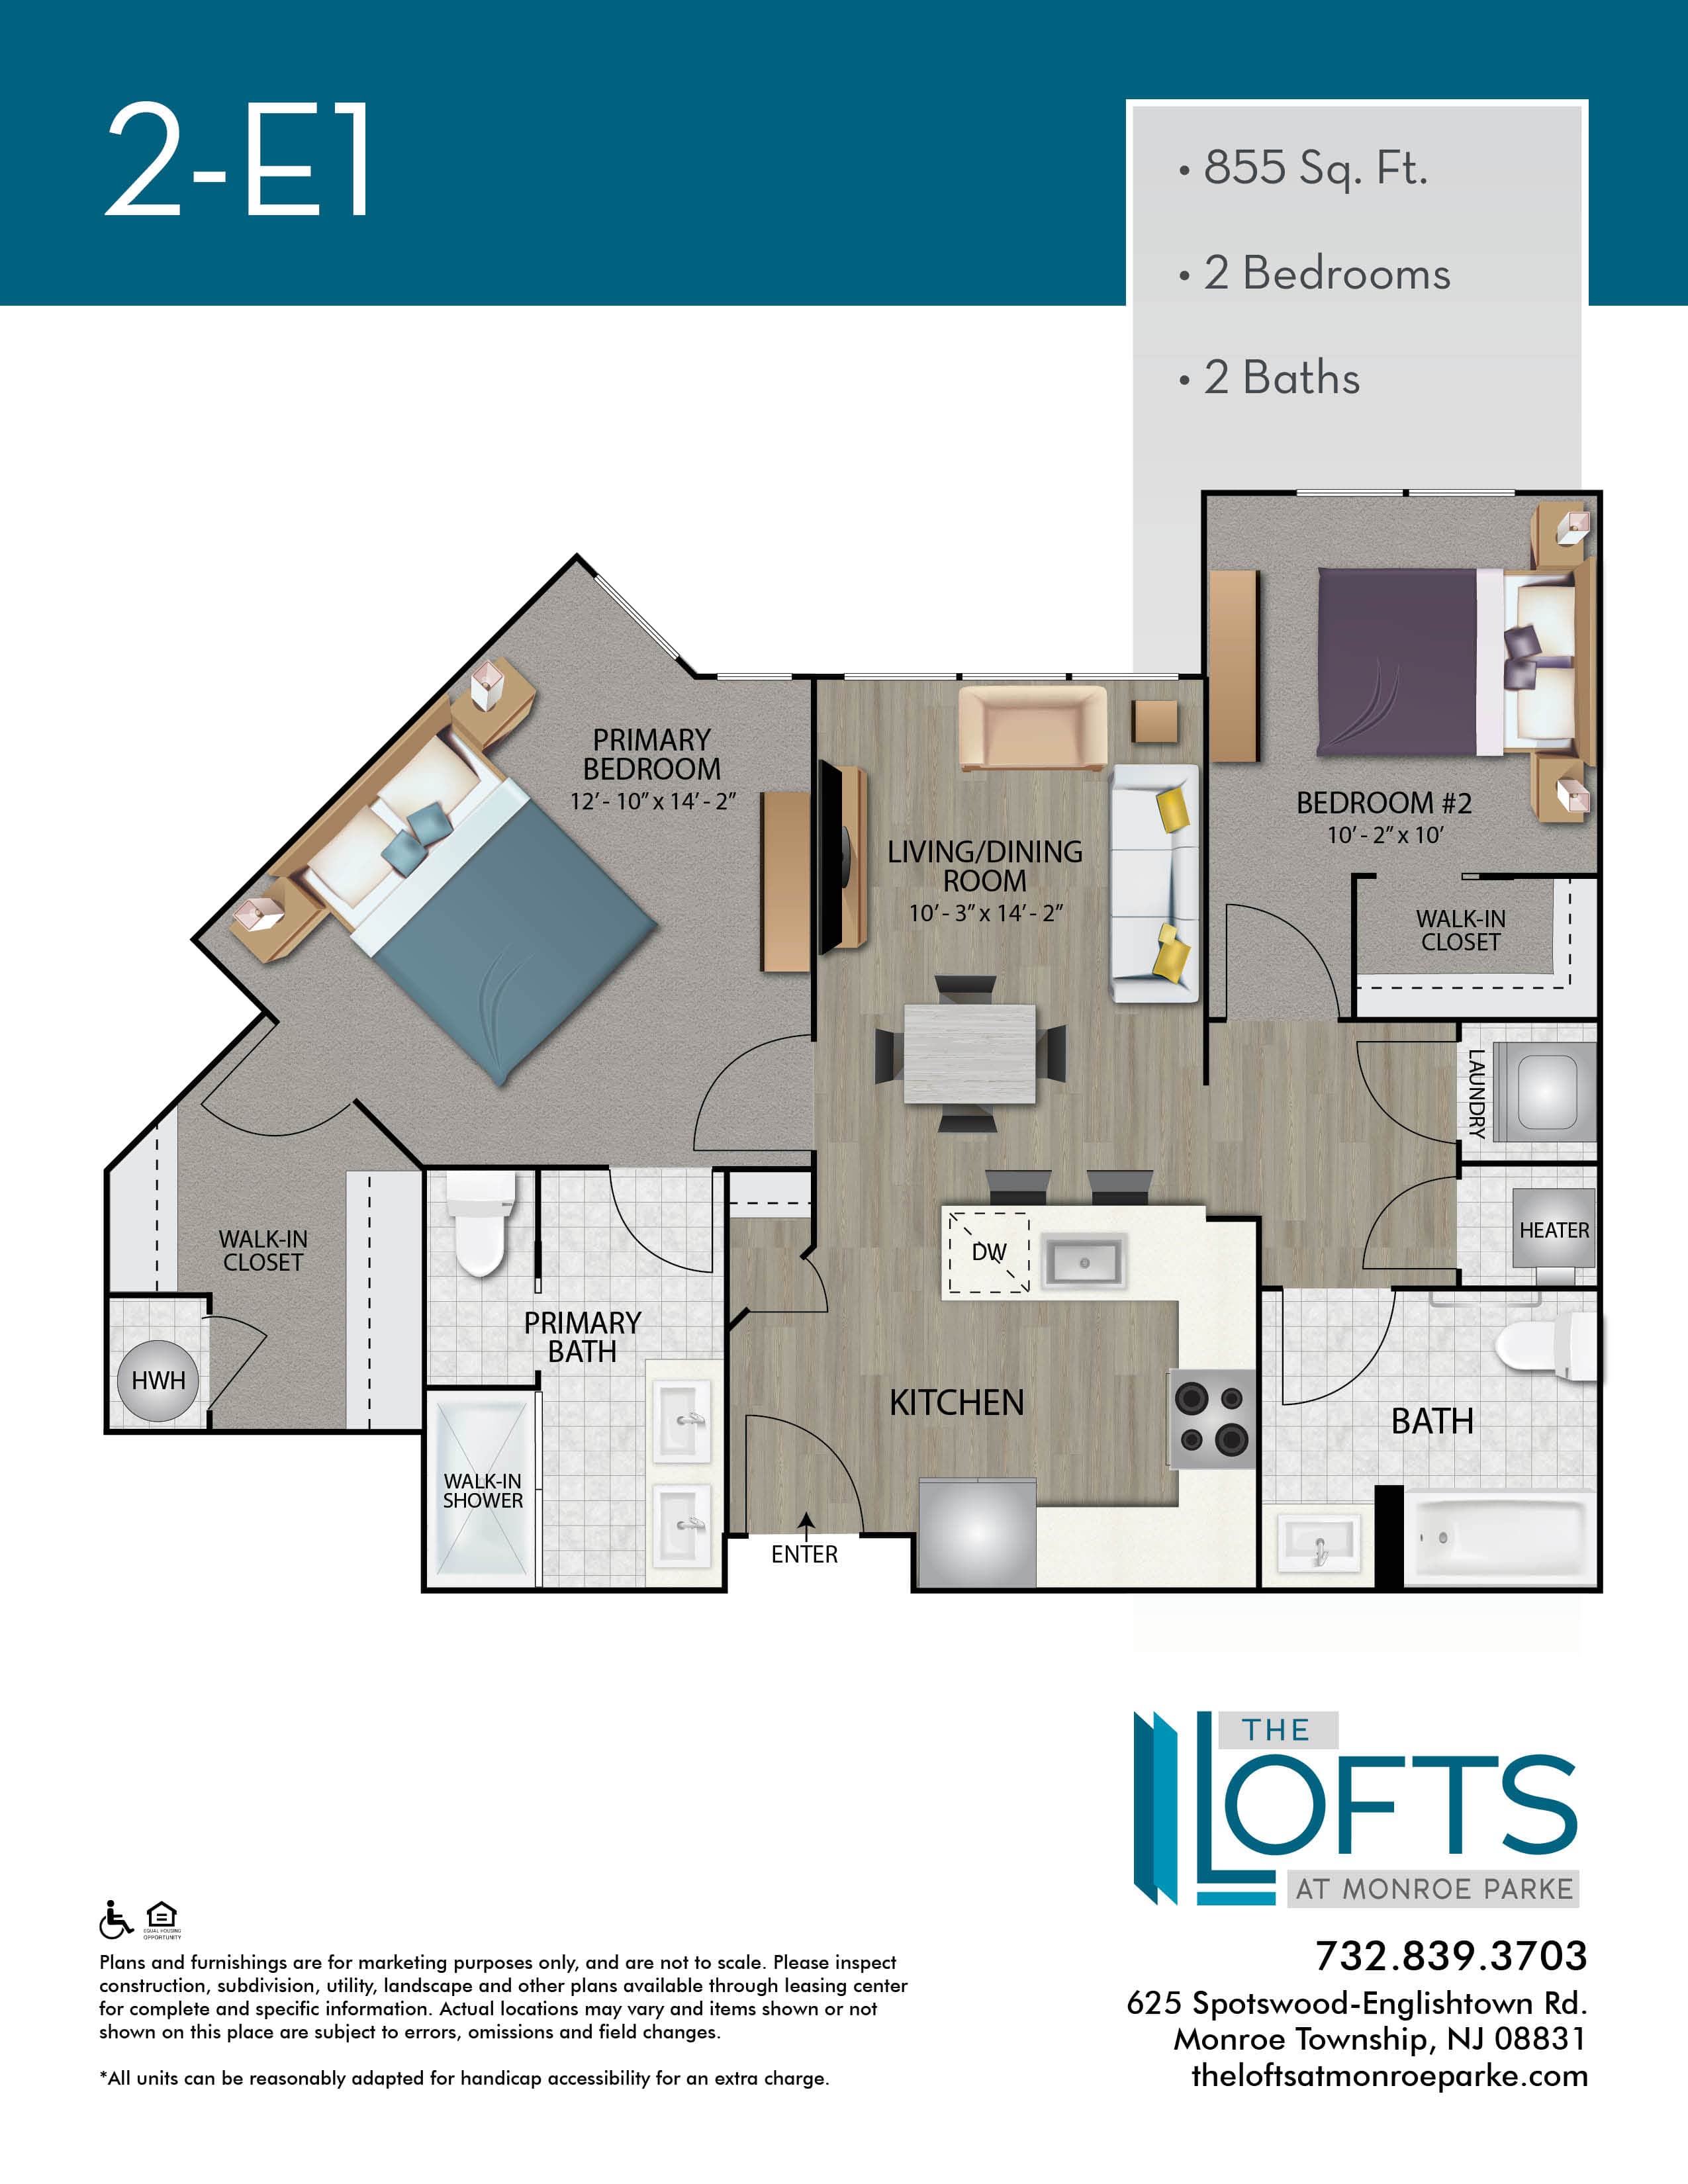 The Lofts at Monroe Park Apartment Floor Plan 2E1